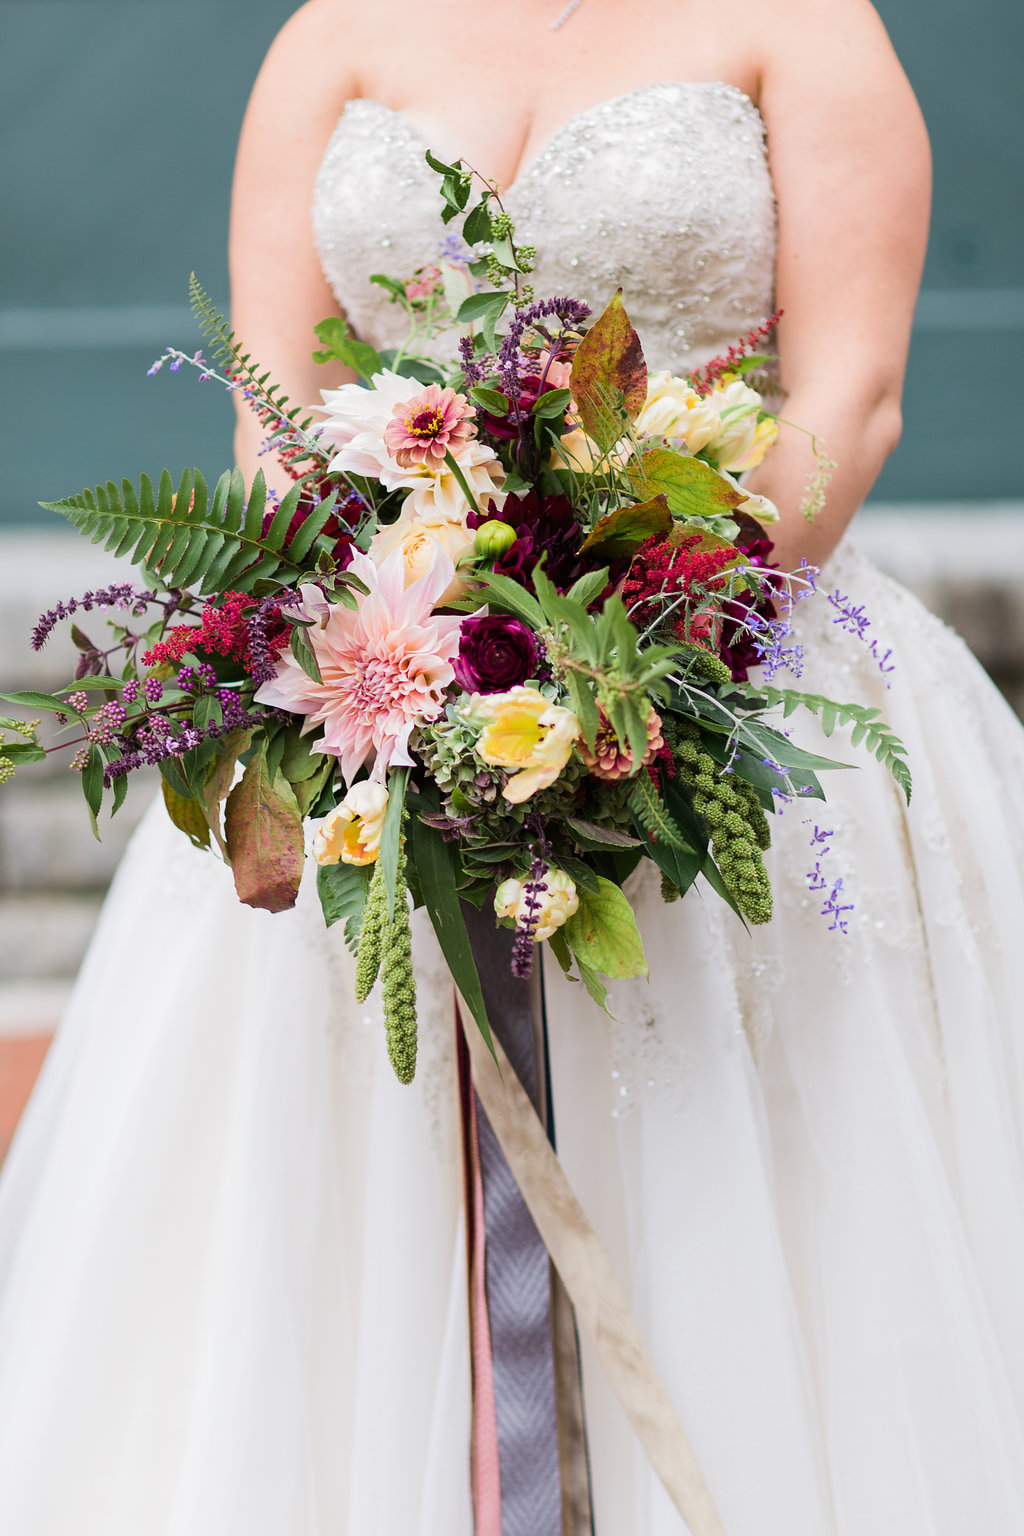 wild bouquet with ferns - https://ruffledblog.com/rustic-woodland-chic-wedding-inspiration-in-baltimore